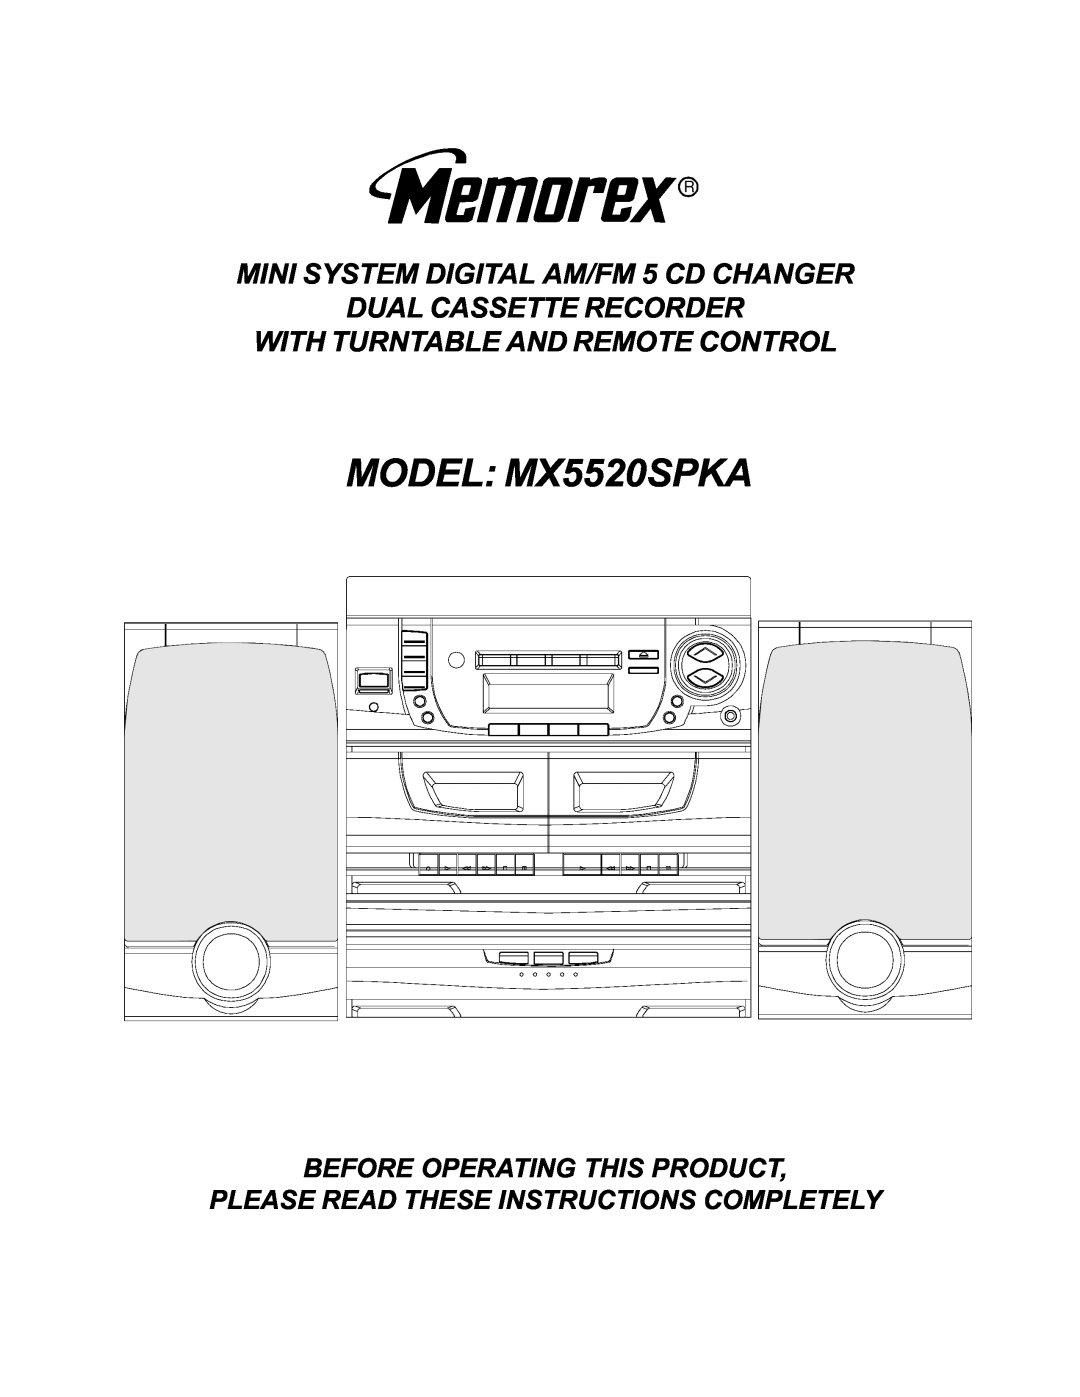 Memorex manual MODEL MX5520SPKA, MINI SYSTEM DIGITAL AM/FM 5 CD CHANGER, Dual Cassette Recorder 